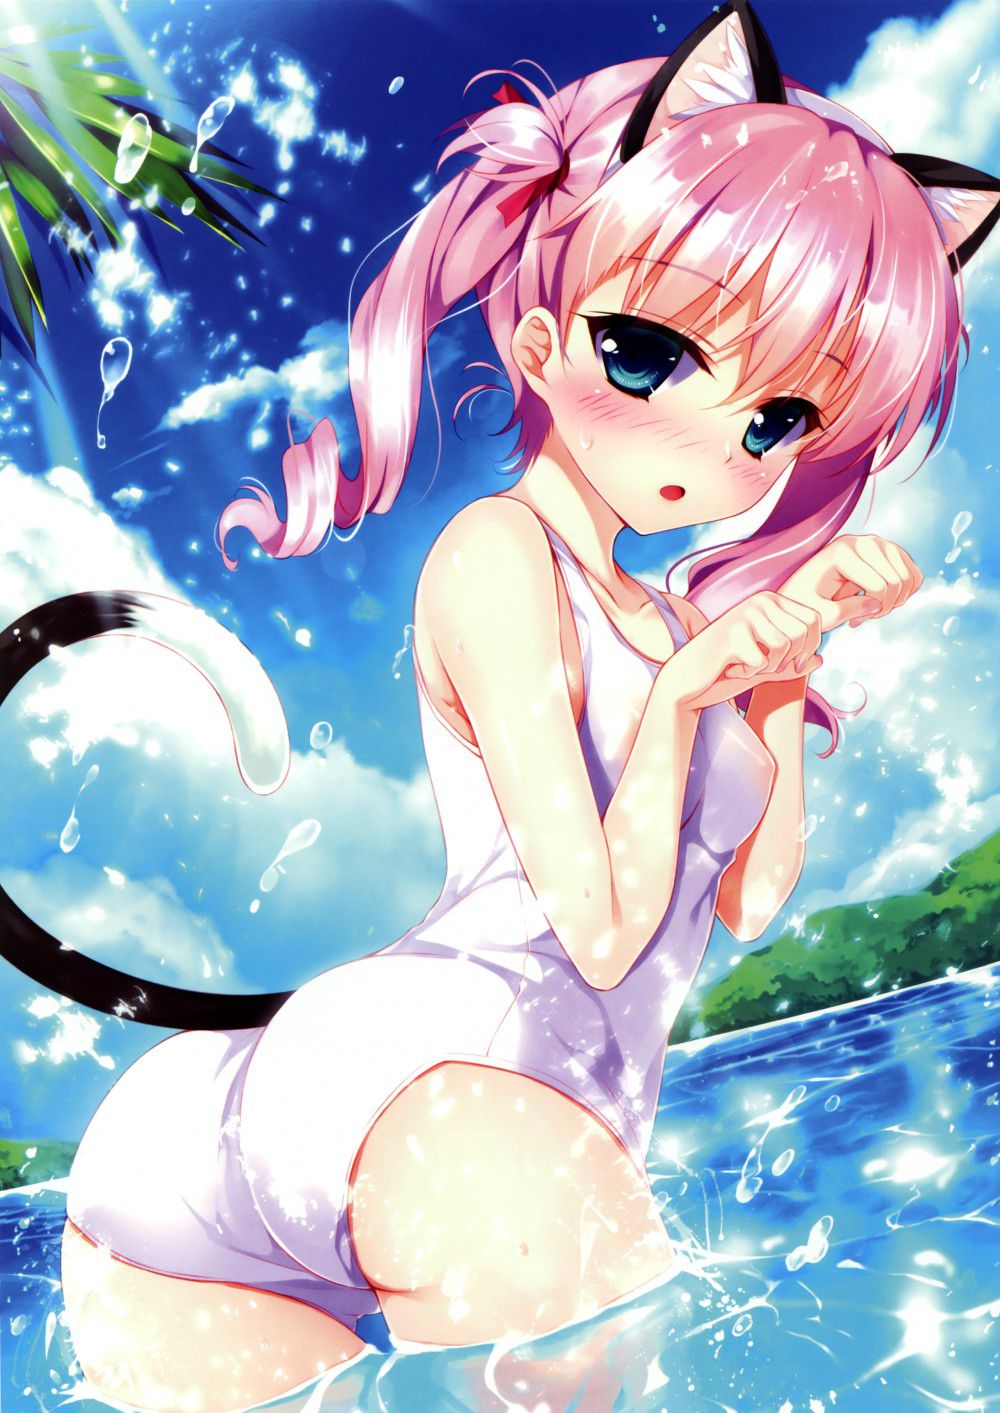 [Image] illustrations of wwwww loli manga anime characters too cute, MoE! 75